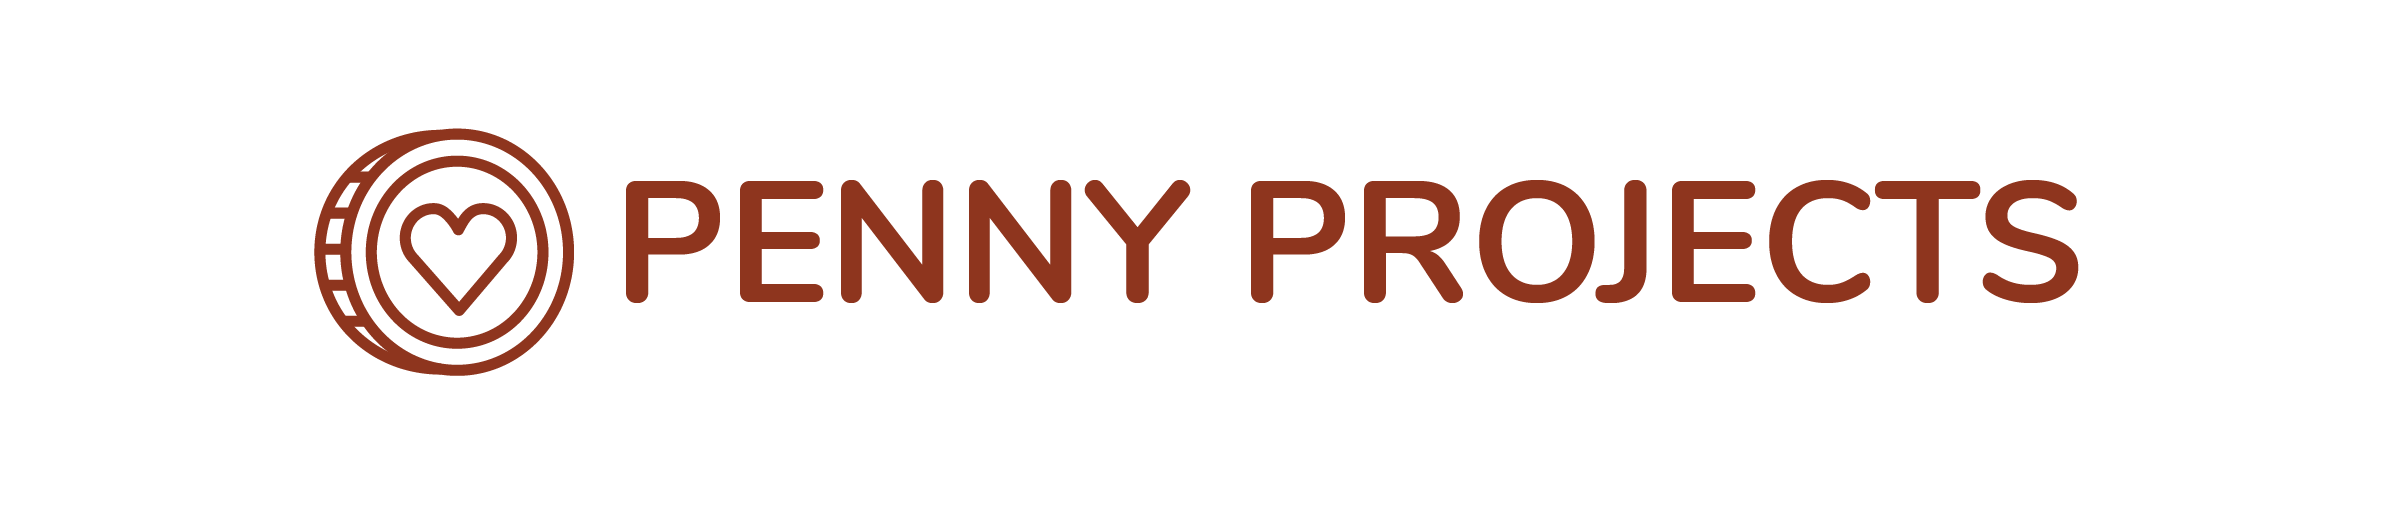 Penny Project Logo